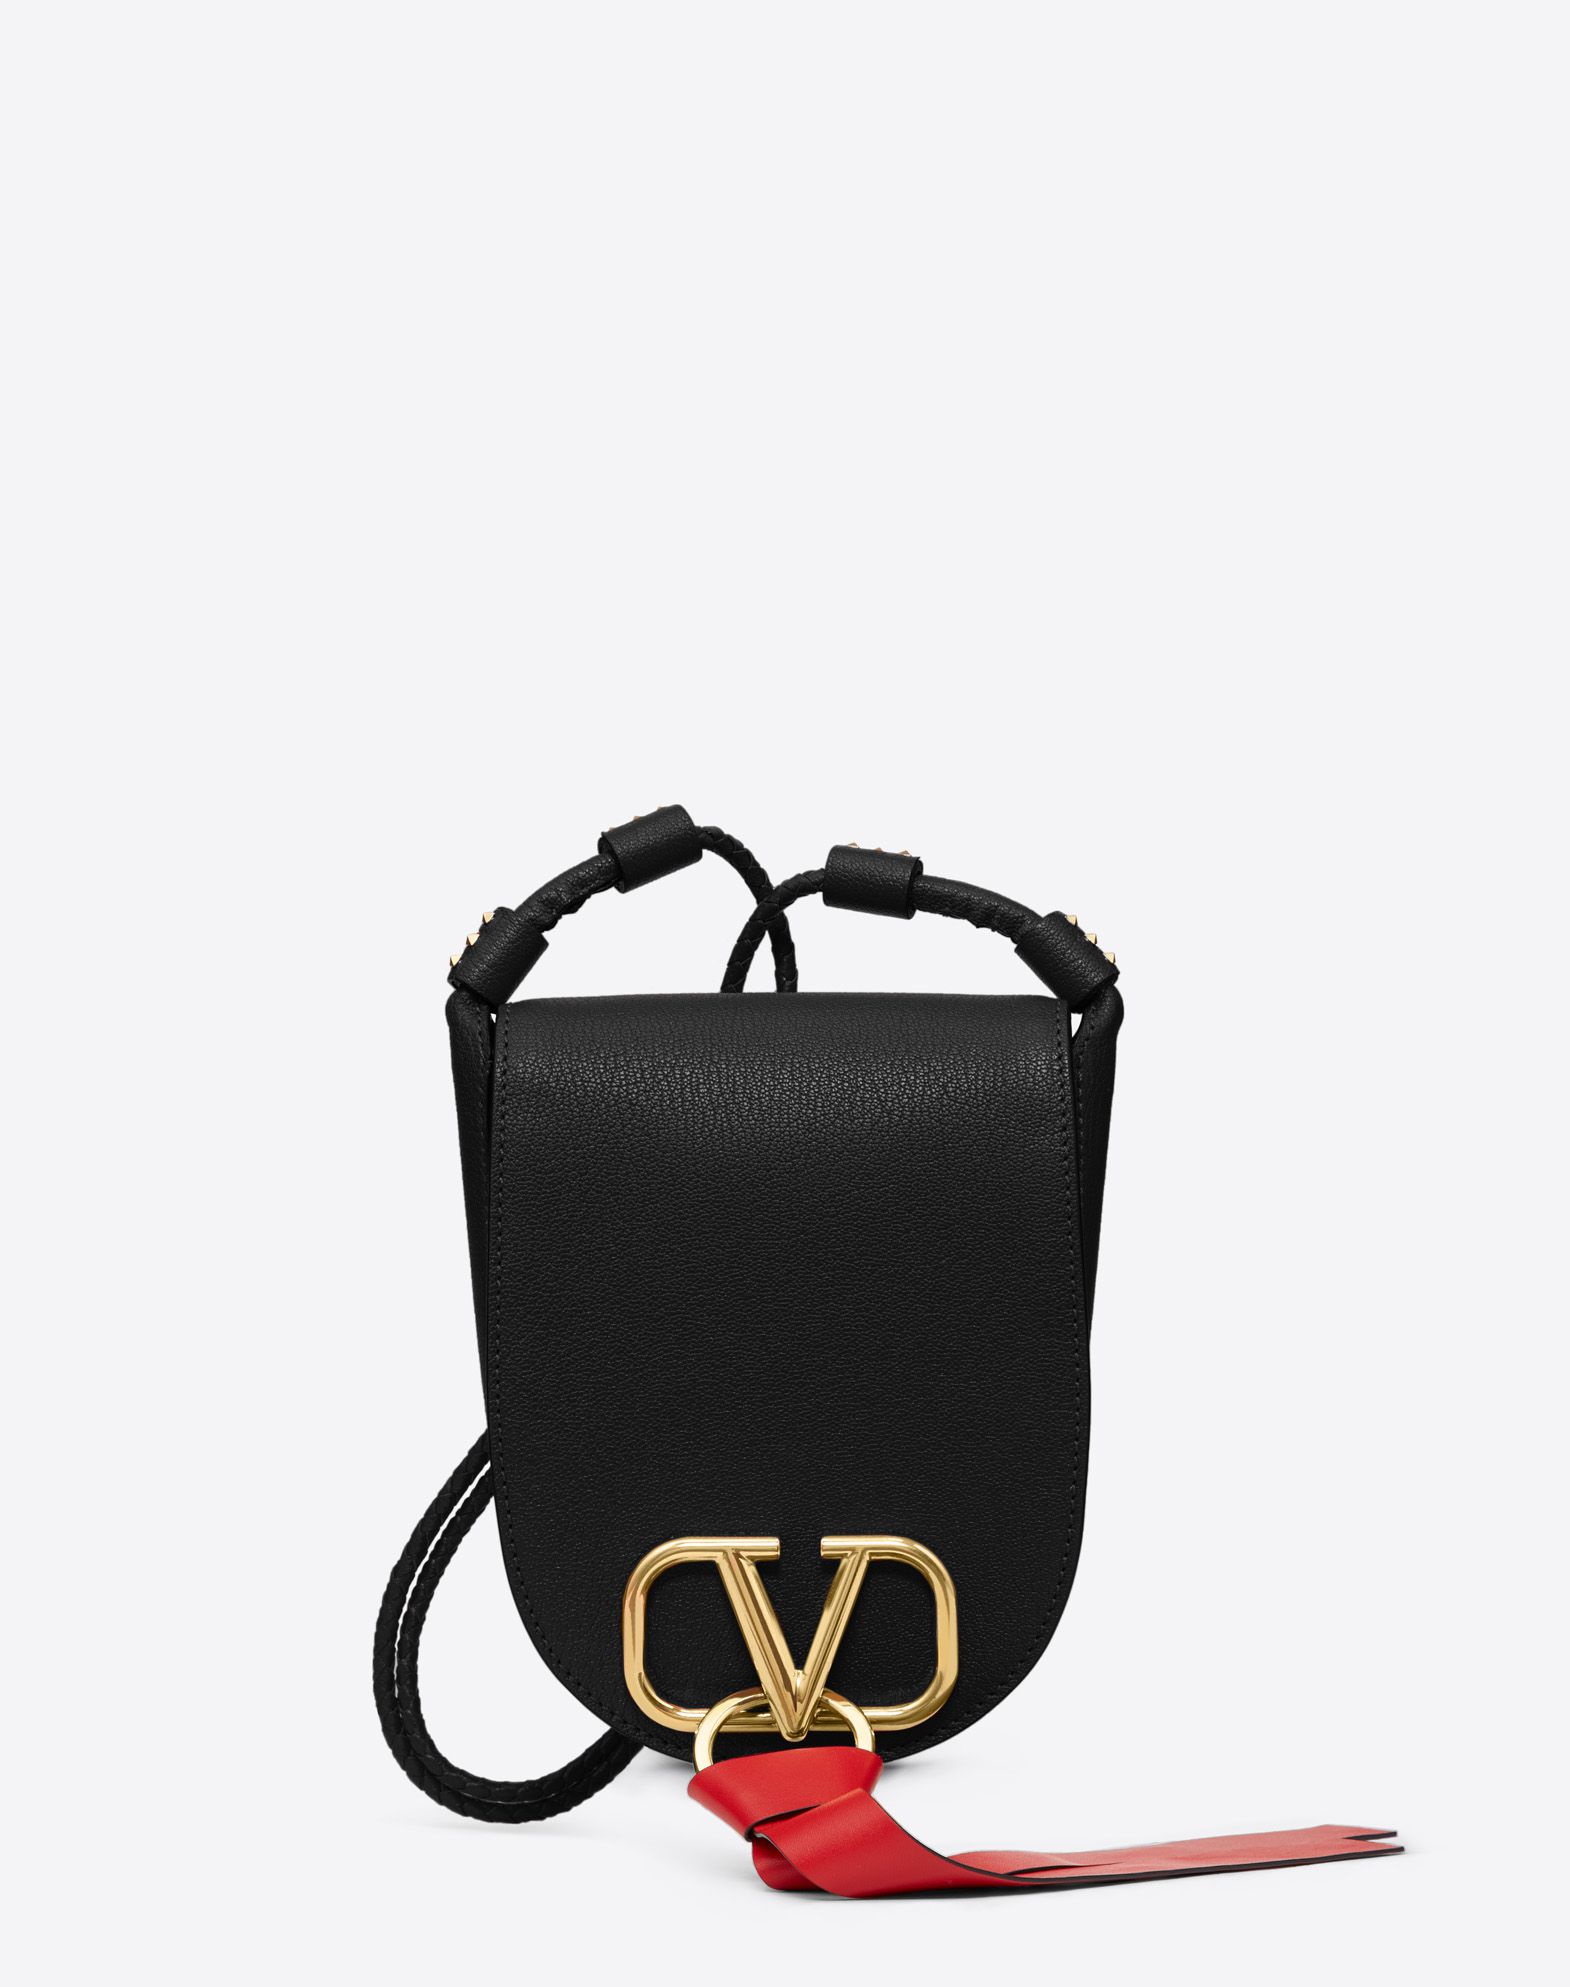 Valentino 'V' ring leather mini cross-body bag